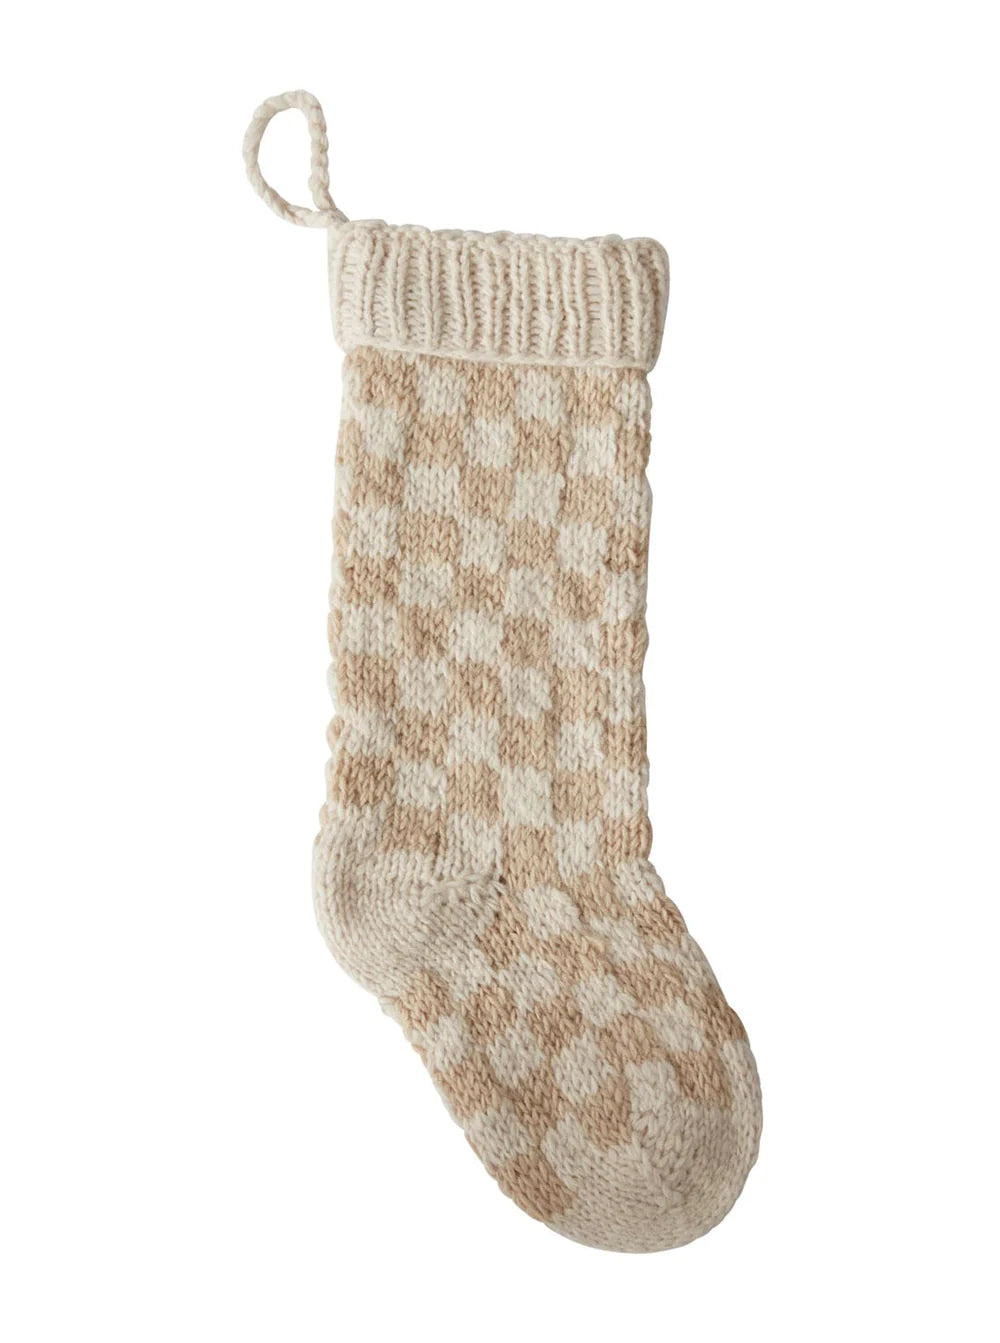 Checkered Knit Stocking